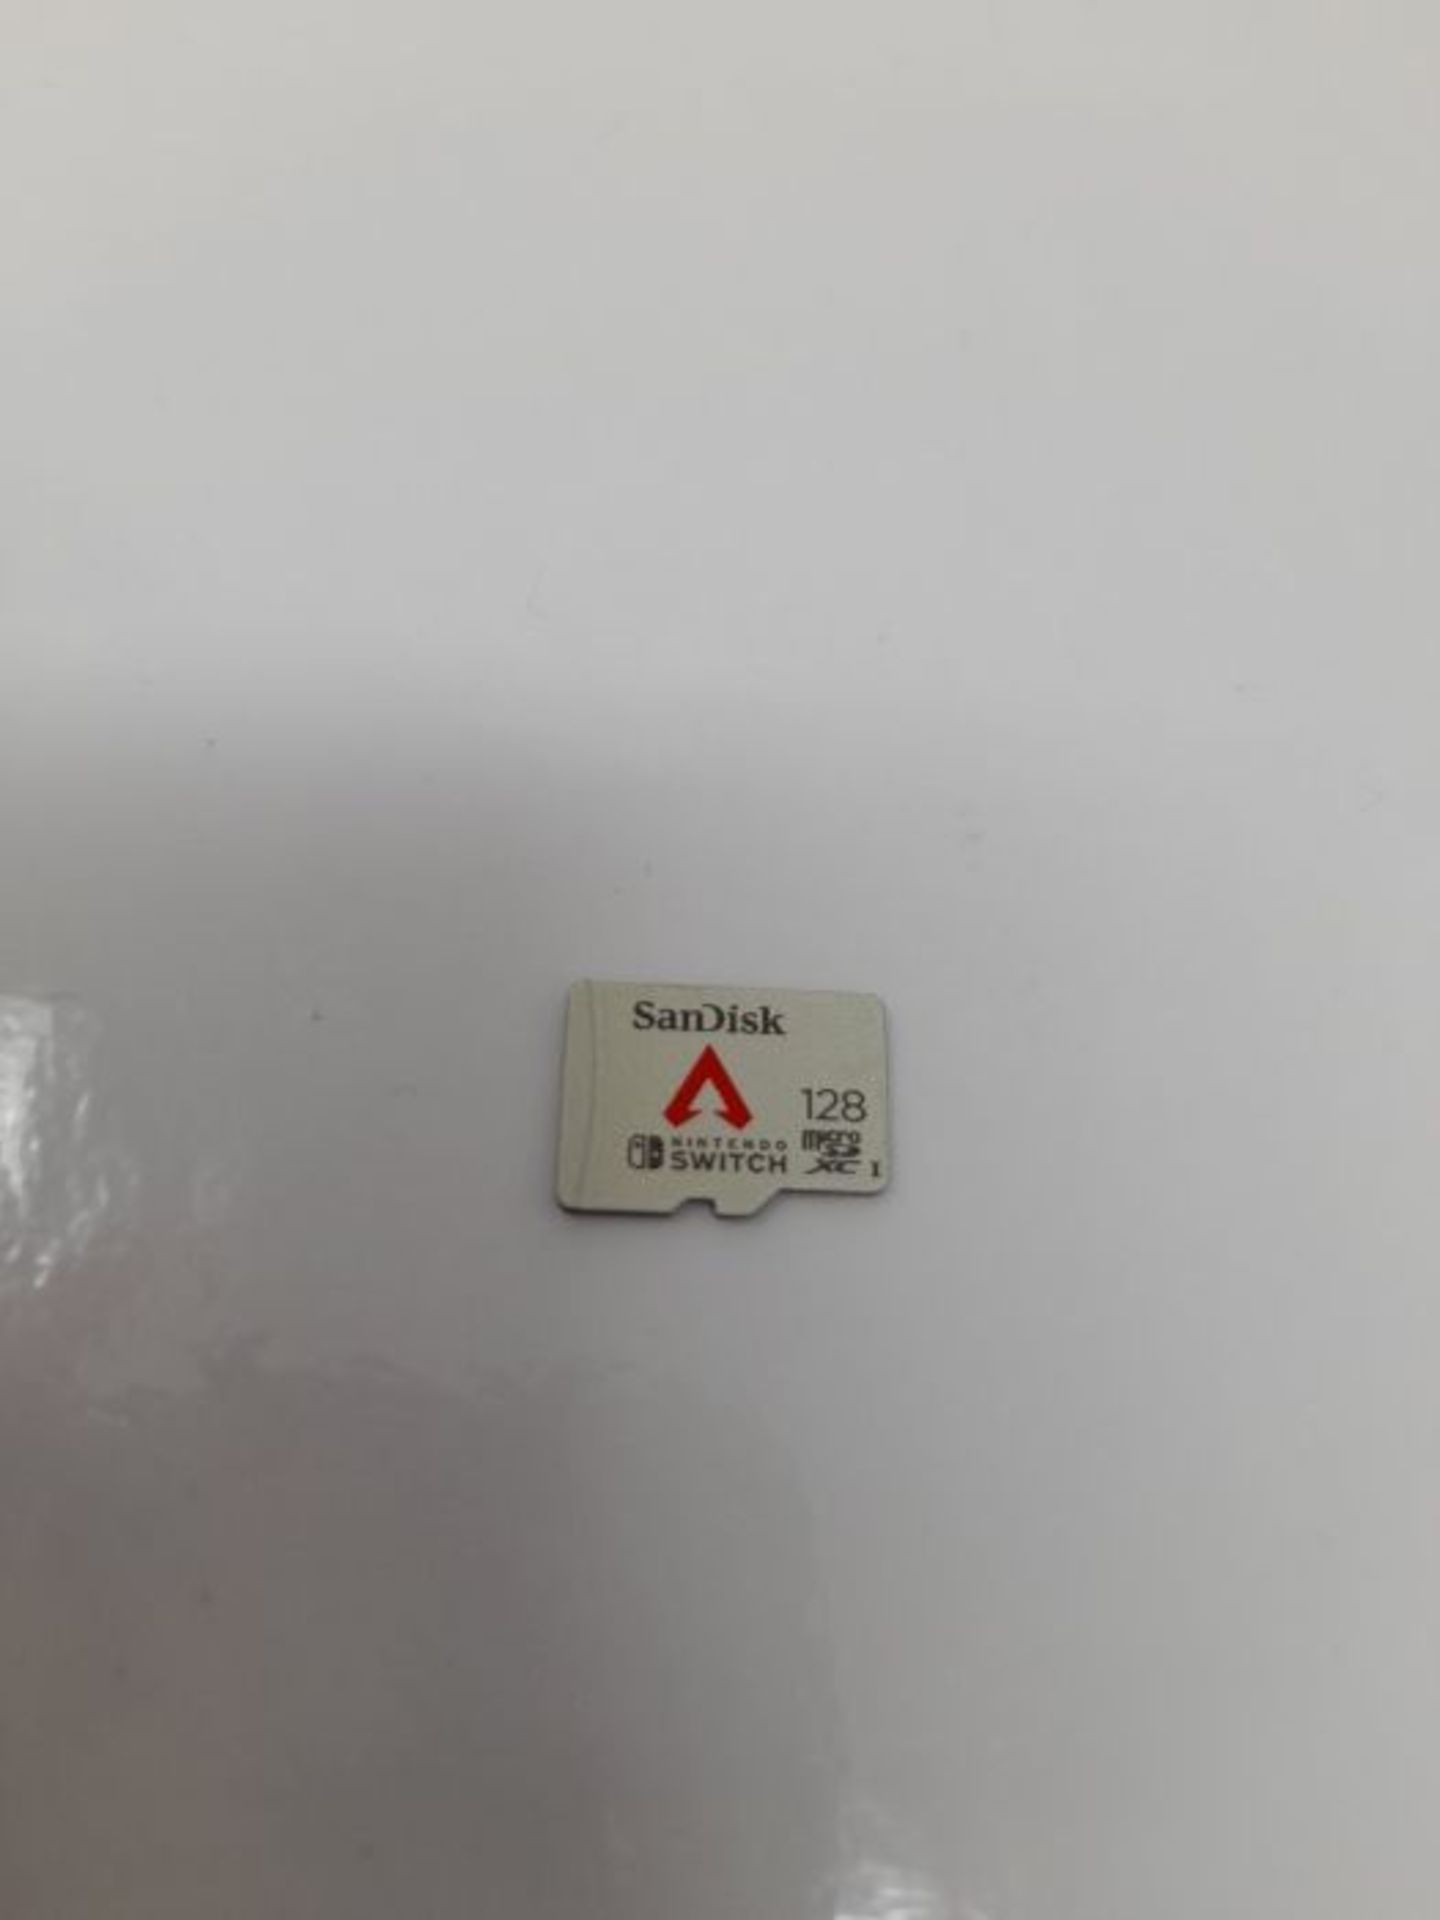 SanDisk 128GB Apex Legends microSDXC card for Nintendo Switch, Nintendo-licensed memor - Image 2 of 3